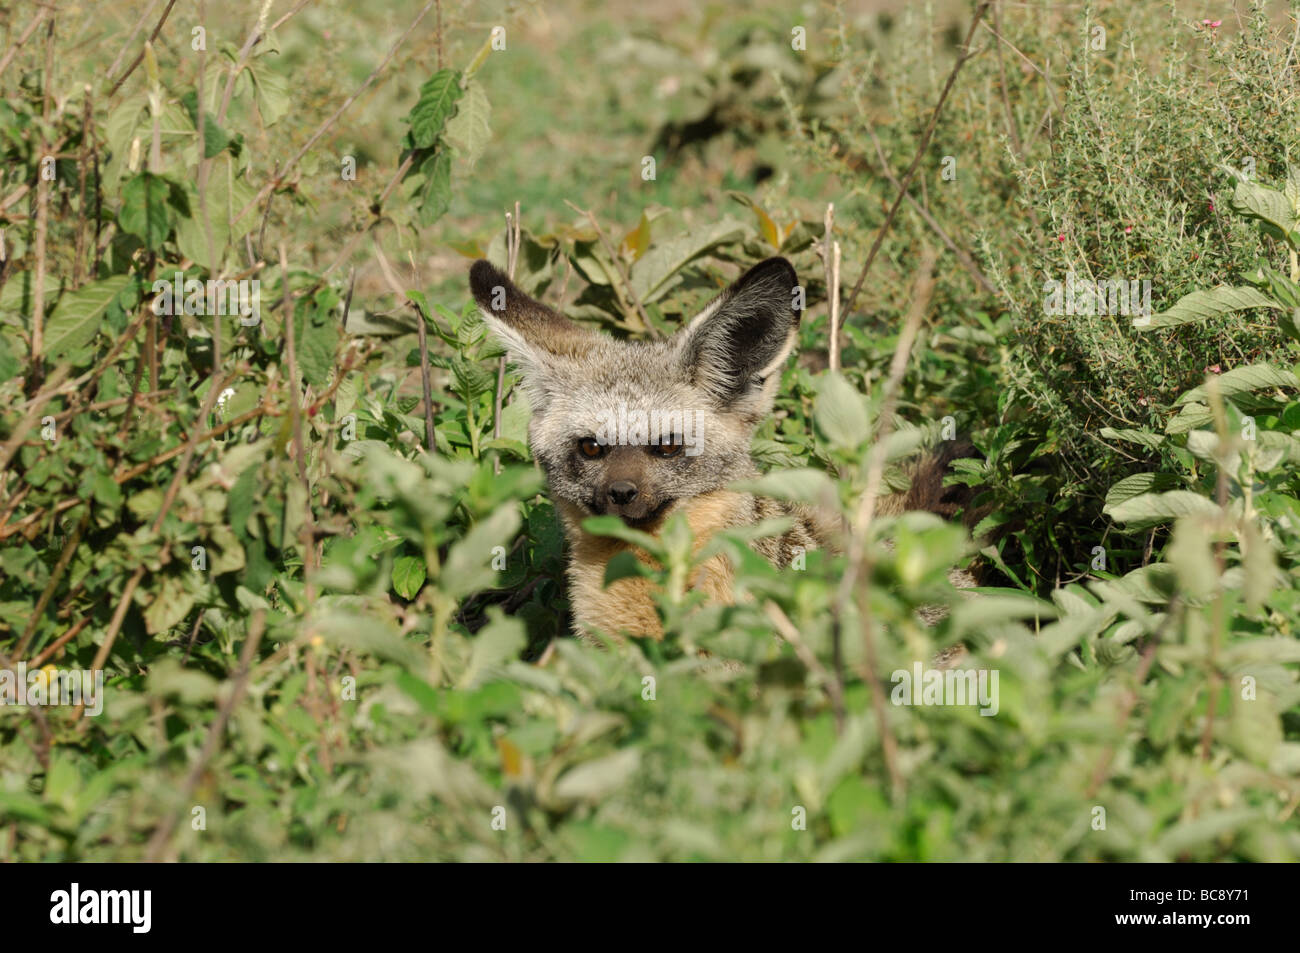 Stock photo of a bat-eared fox peering from behind brush, Ndutu, Ngorongoro Conservation Area, Tanzania, February 2009. Stock Photo